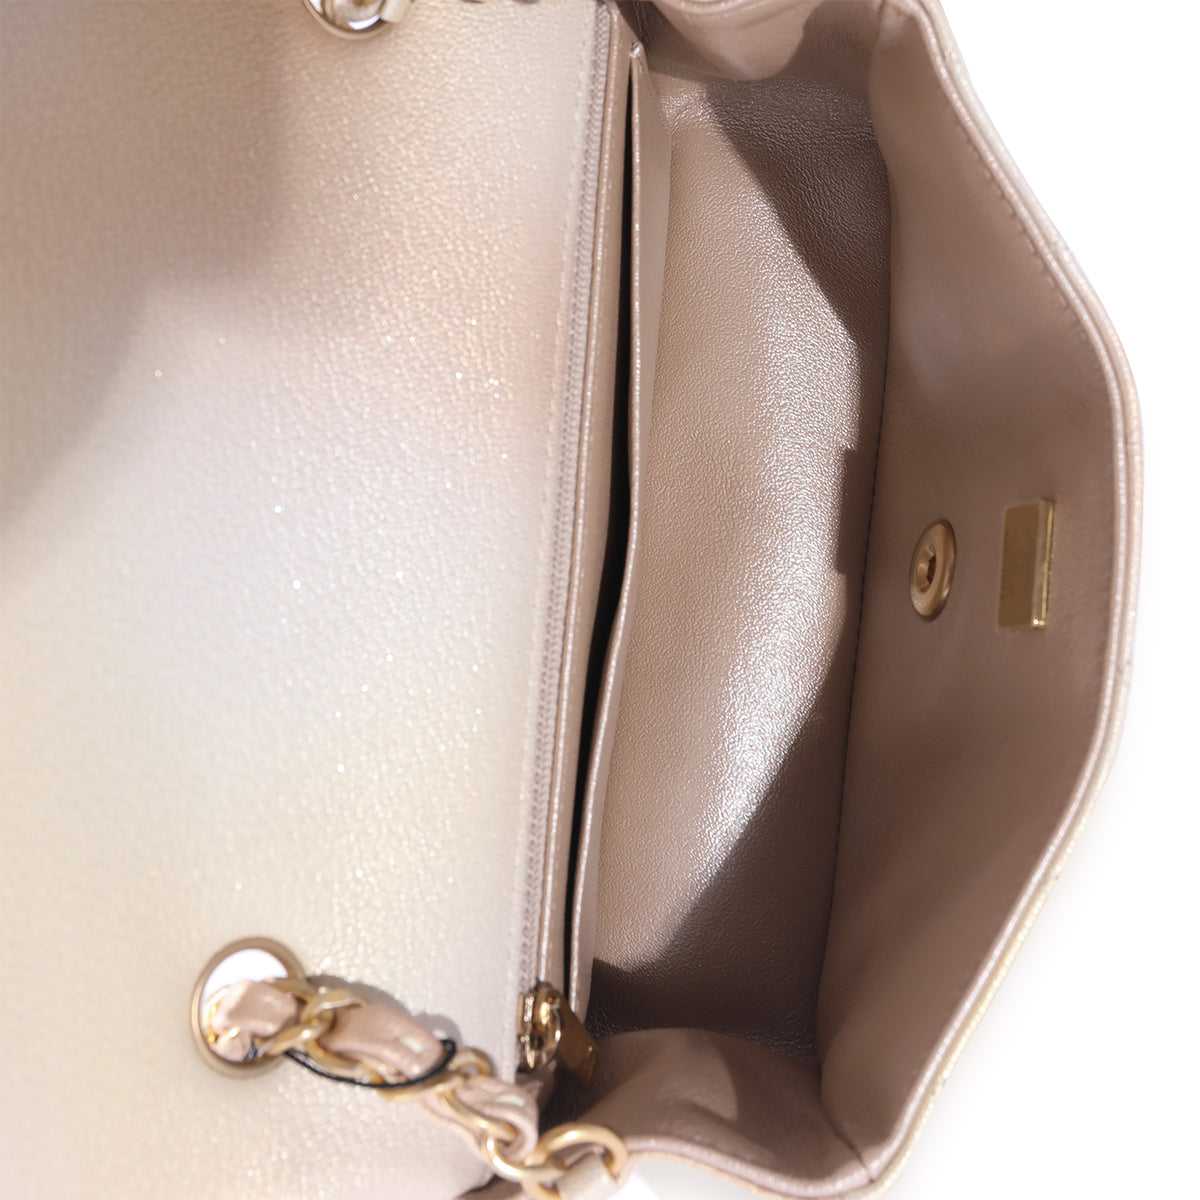 Chanel 22C Metallic Ombre Quilted Lambskin Rectangular Mini Flap Bag